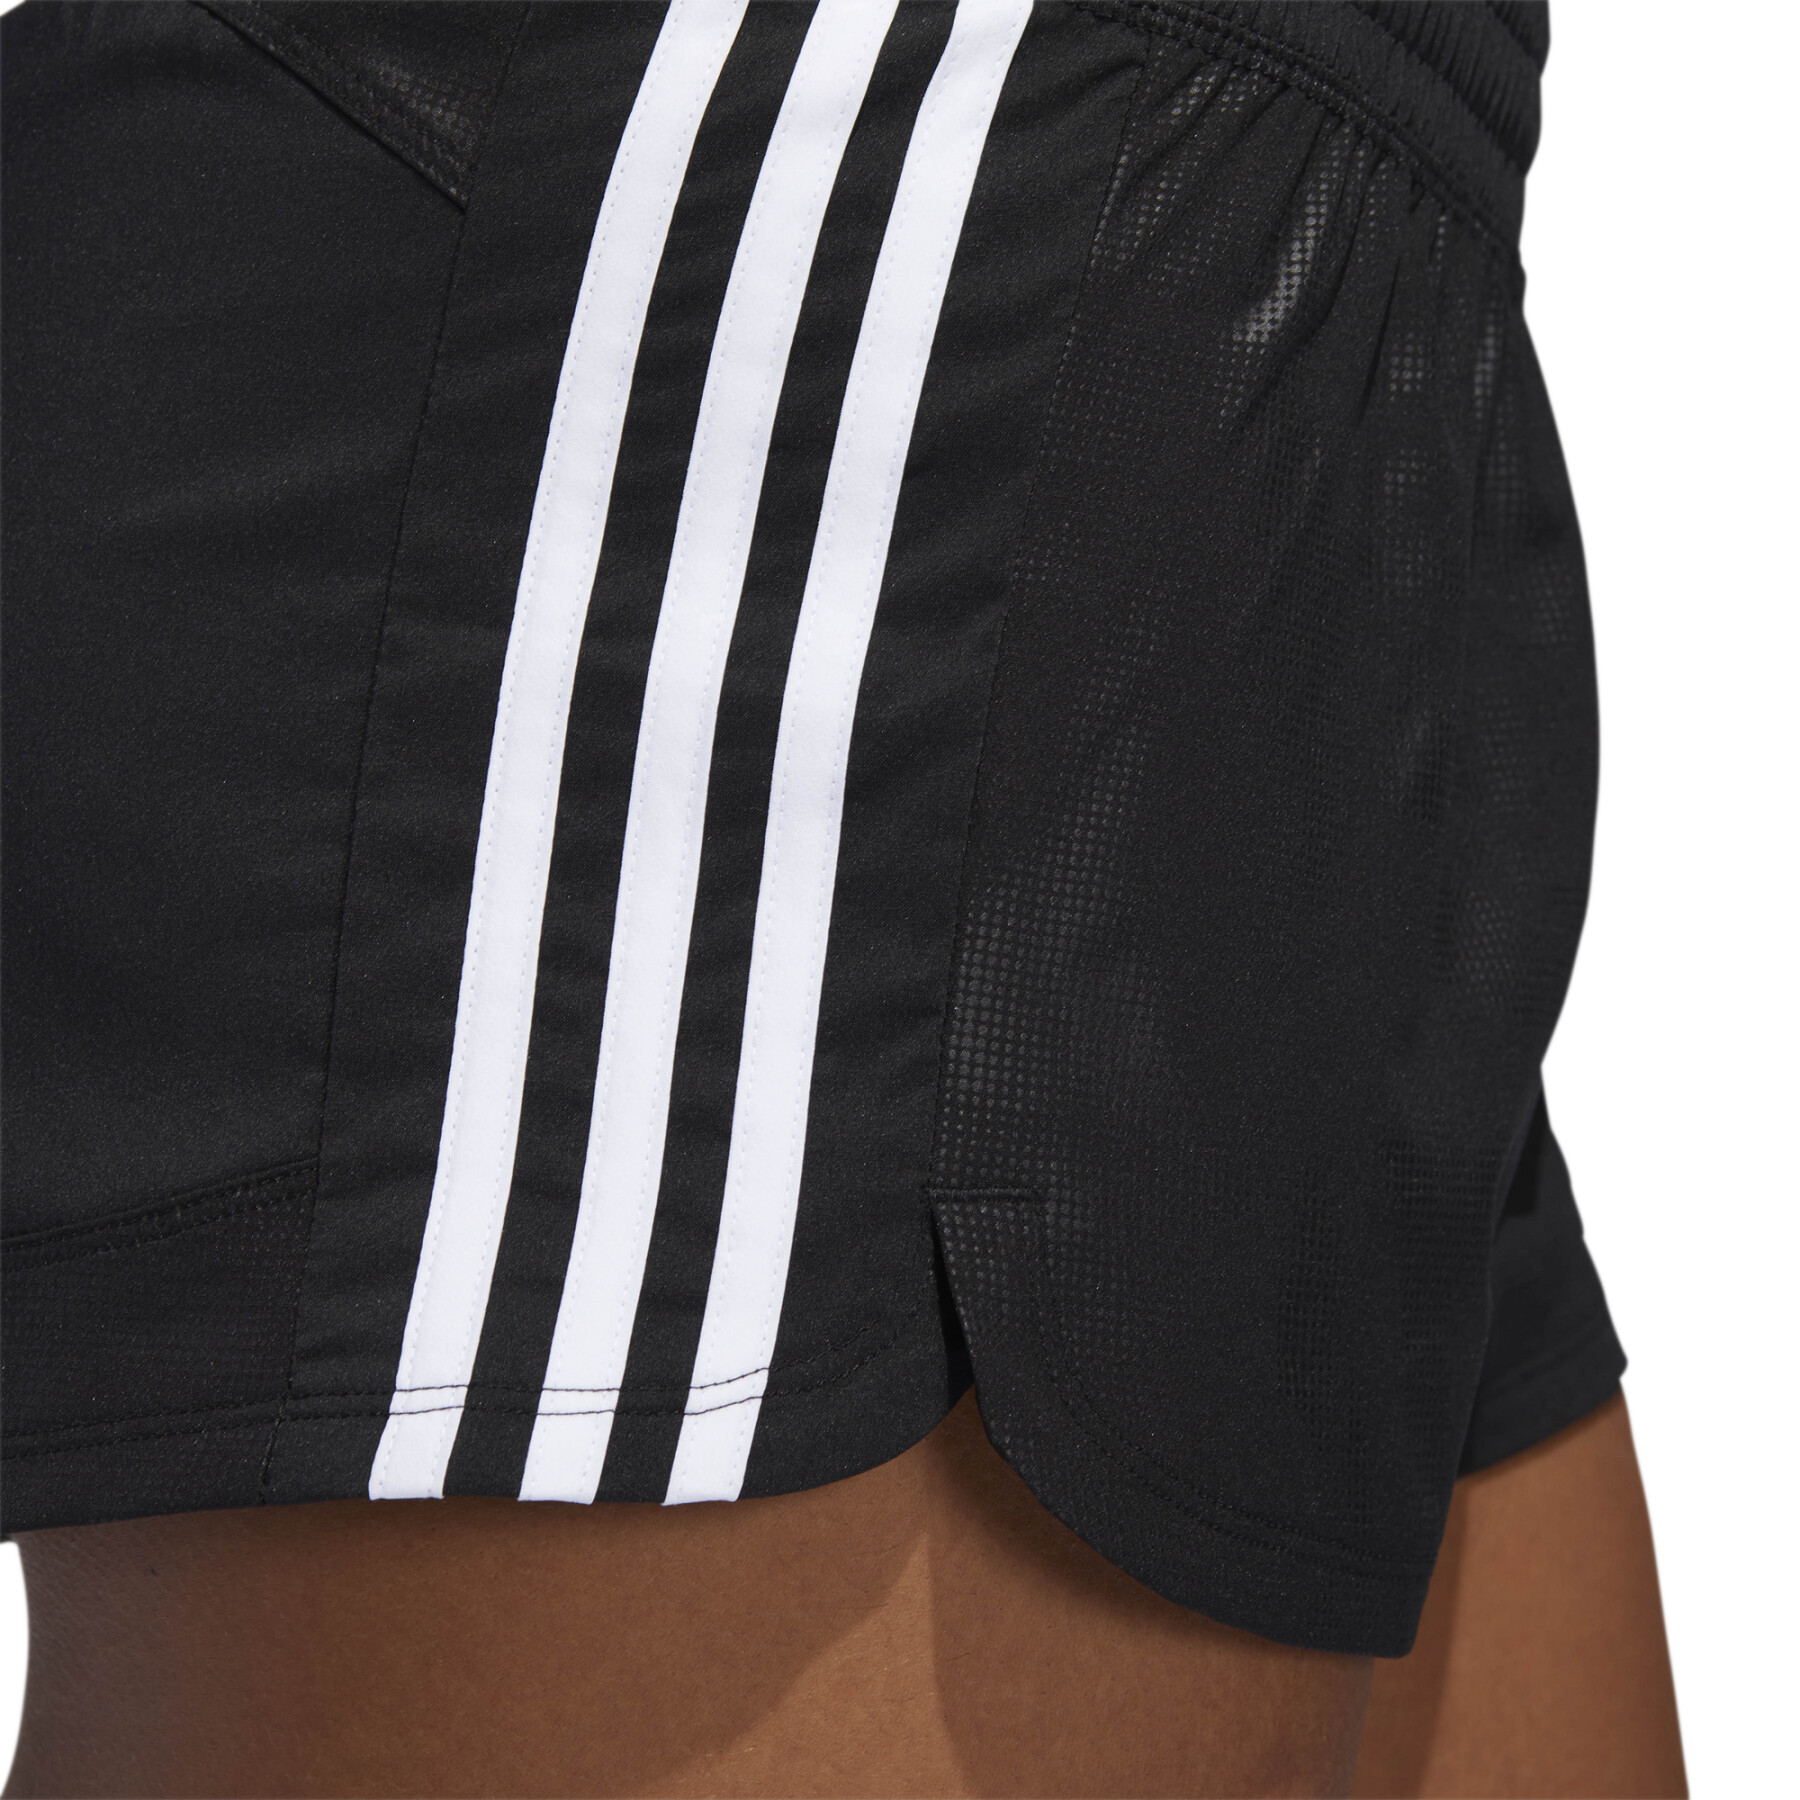 Women's shorts adidas 3-Stripes